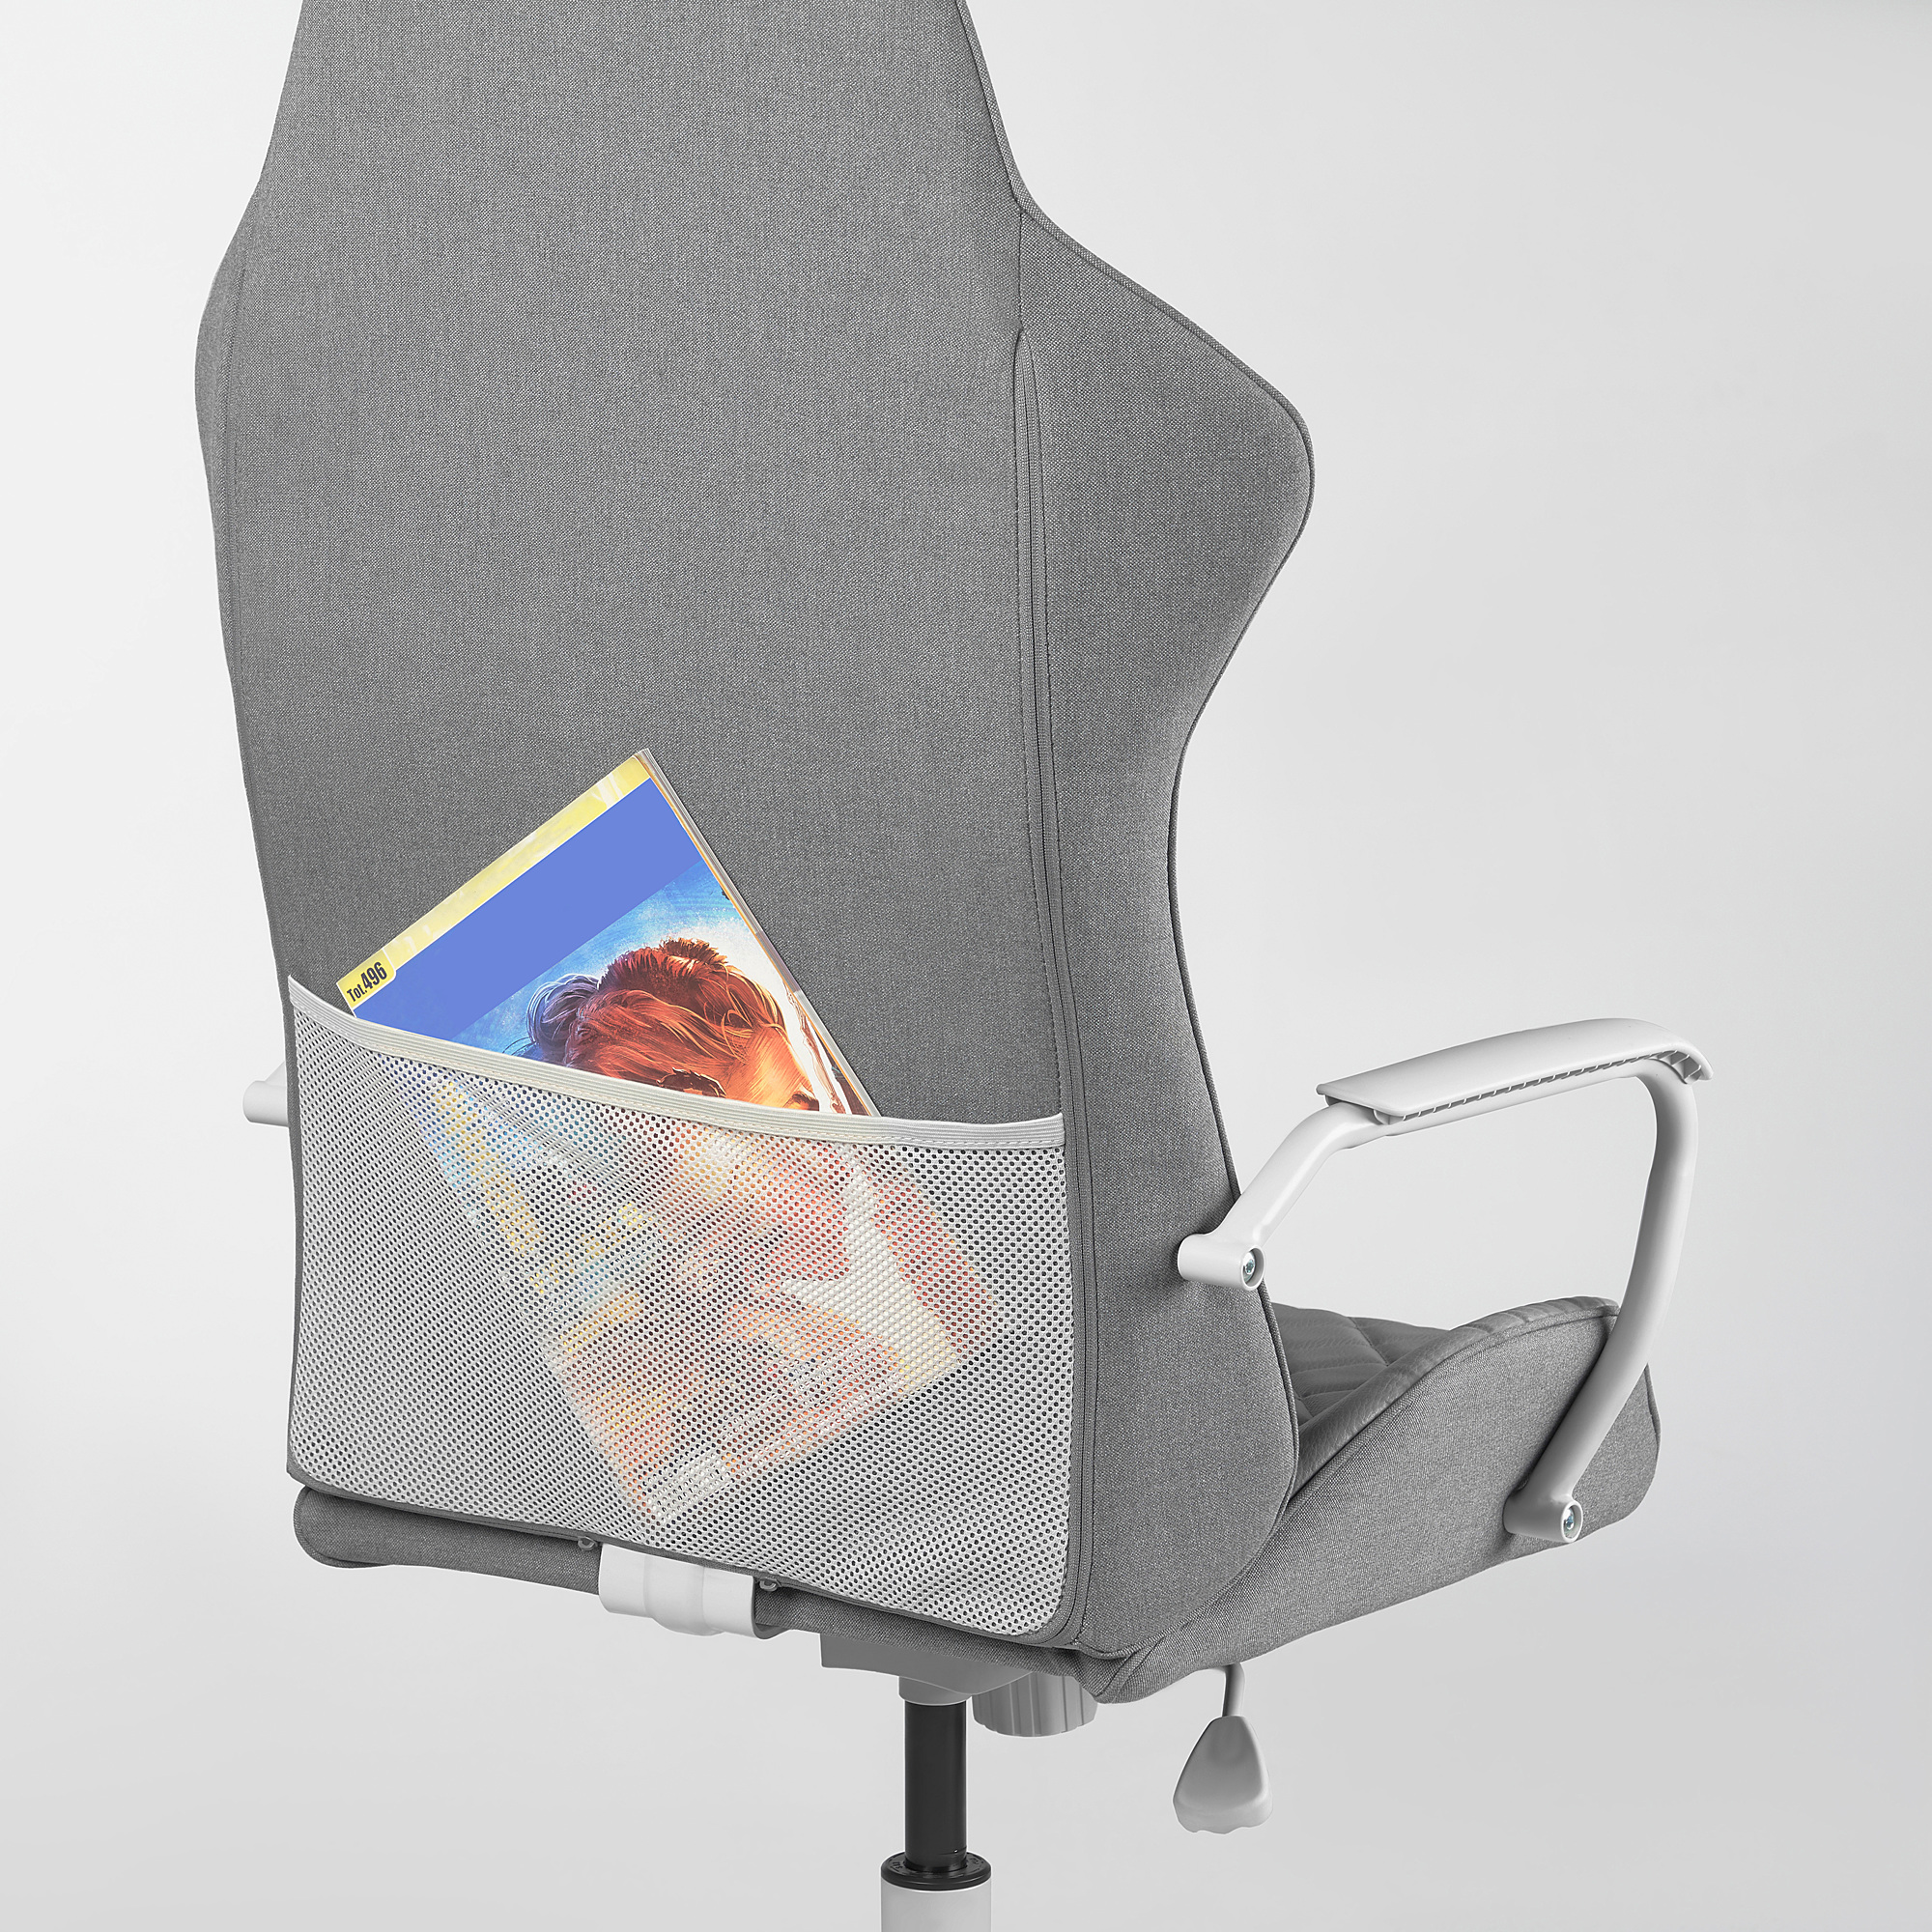 UTESPELARE gaming chair